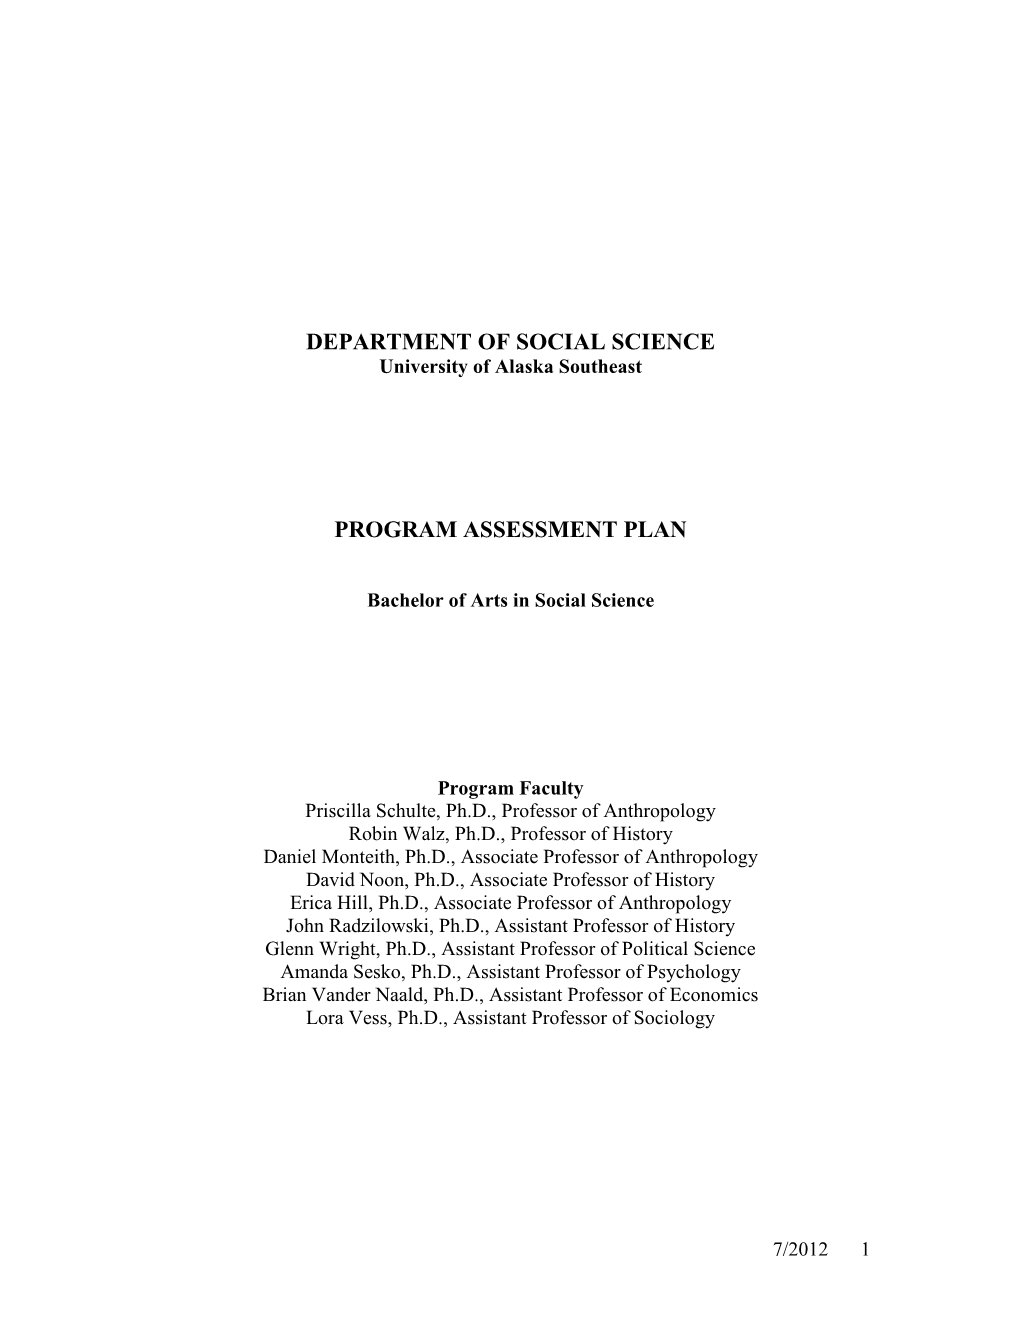 Department of Social Science Program Assessment Plan